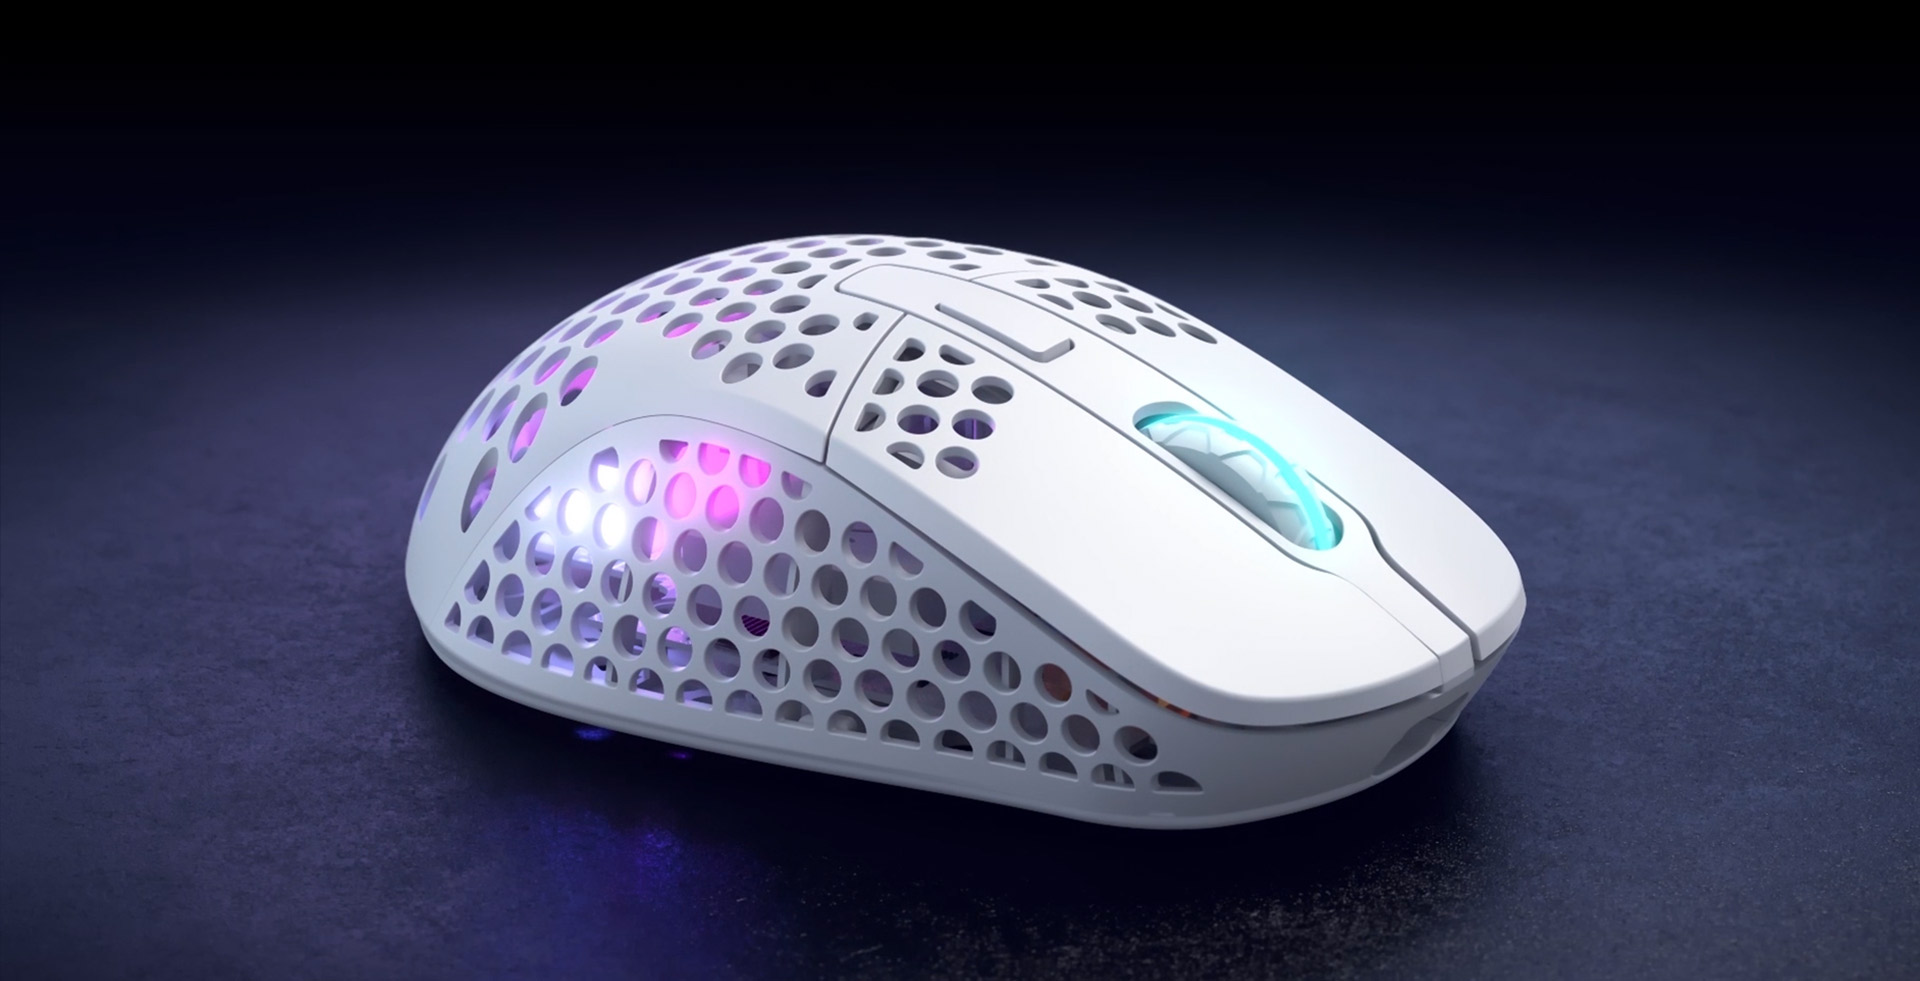 Xtrfy lance la souris gaming M4 Wireless